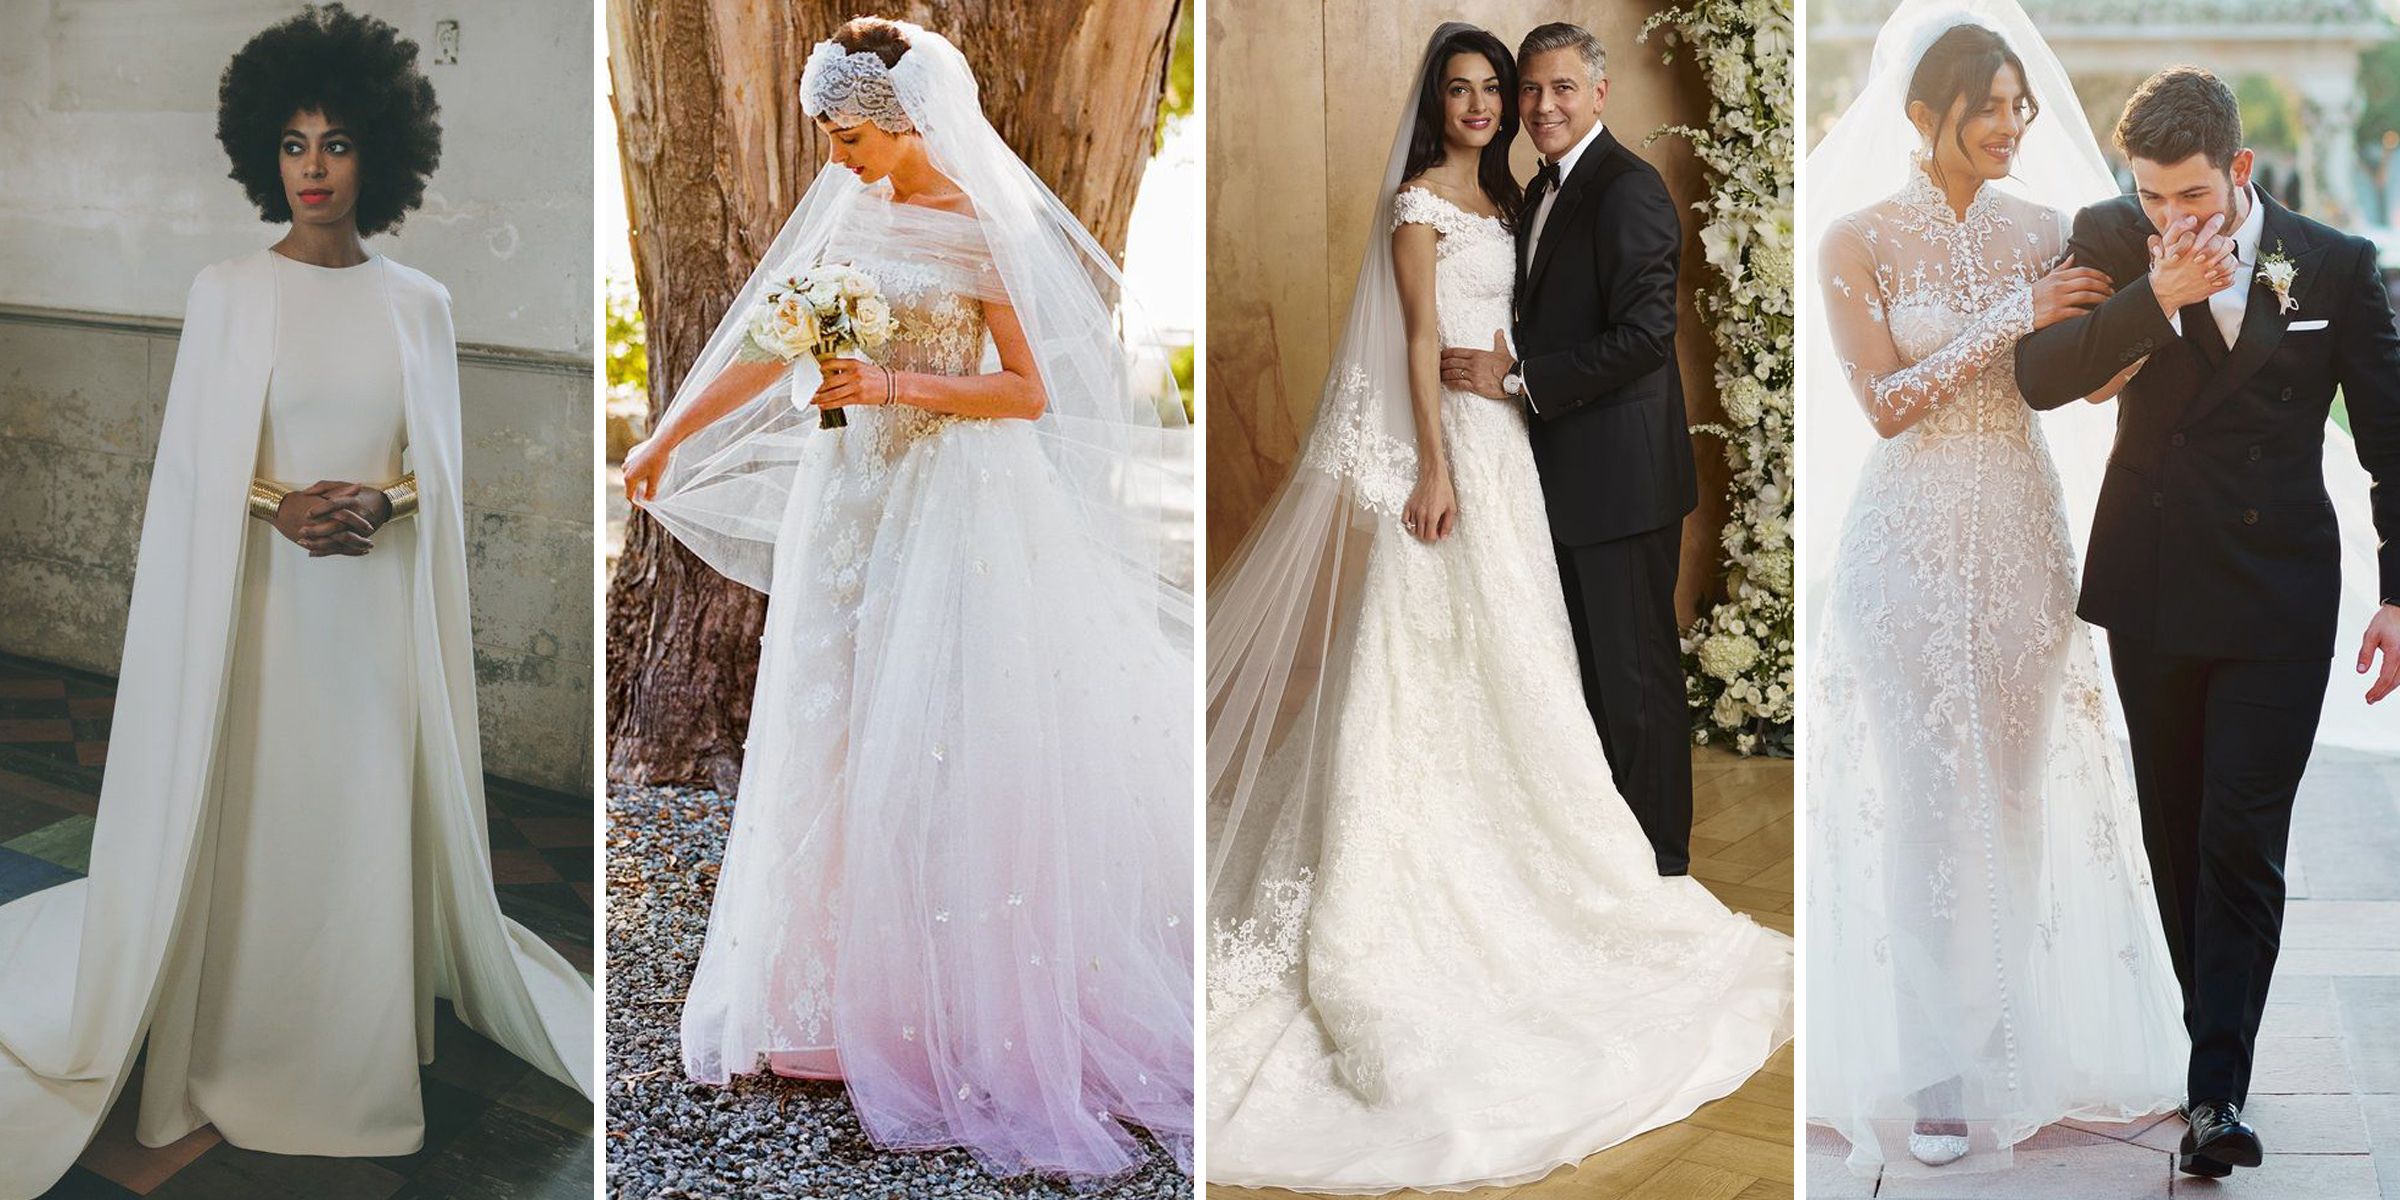 Israeli wedding dress designer – White City wedding bridal gowns